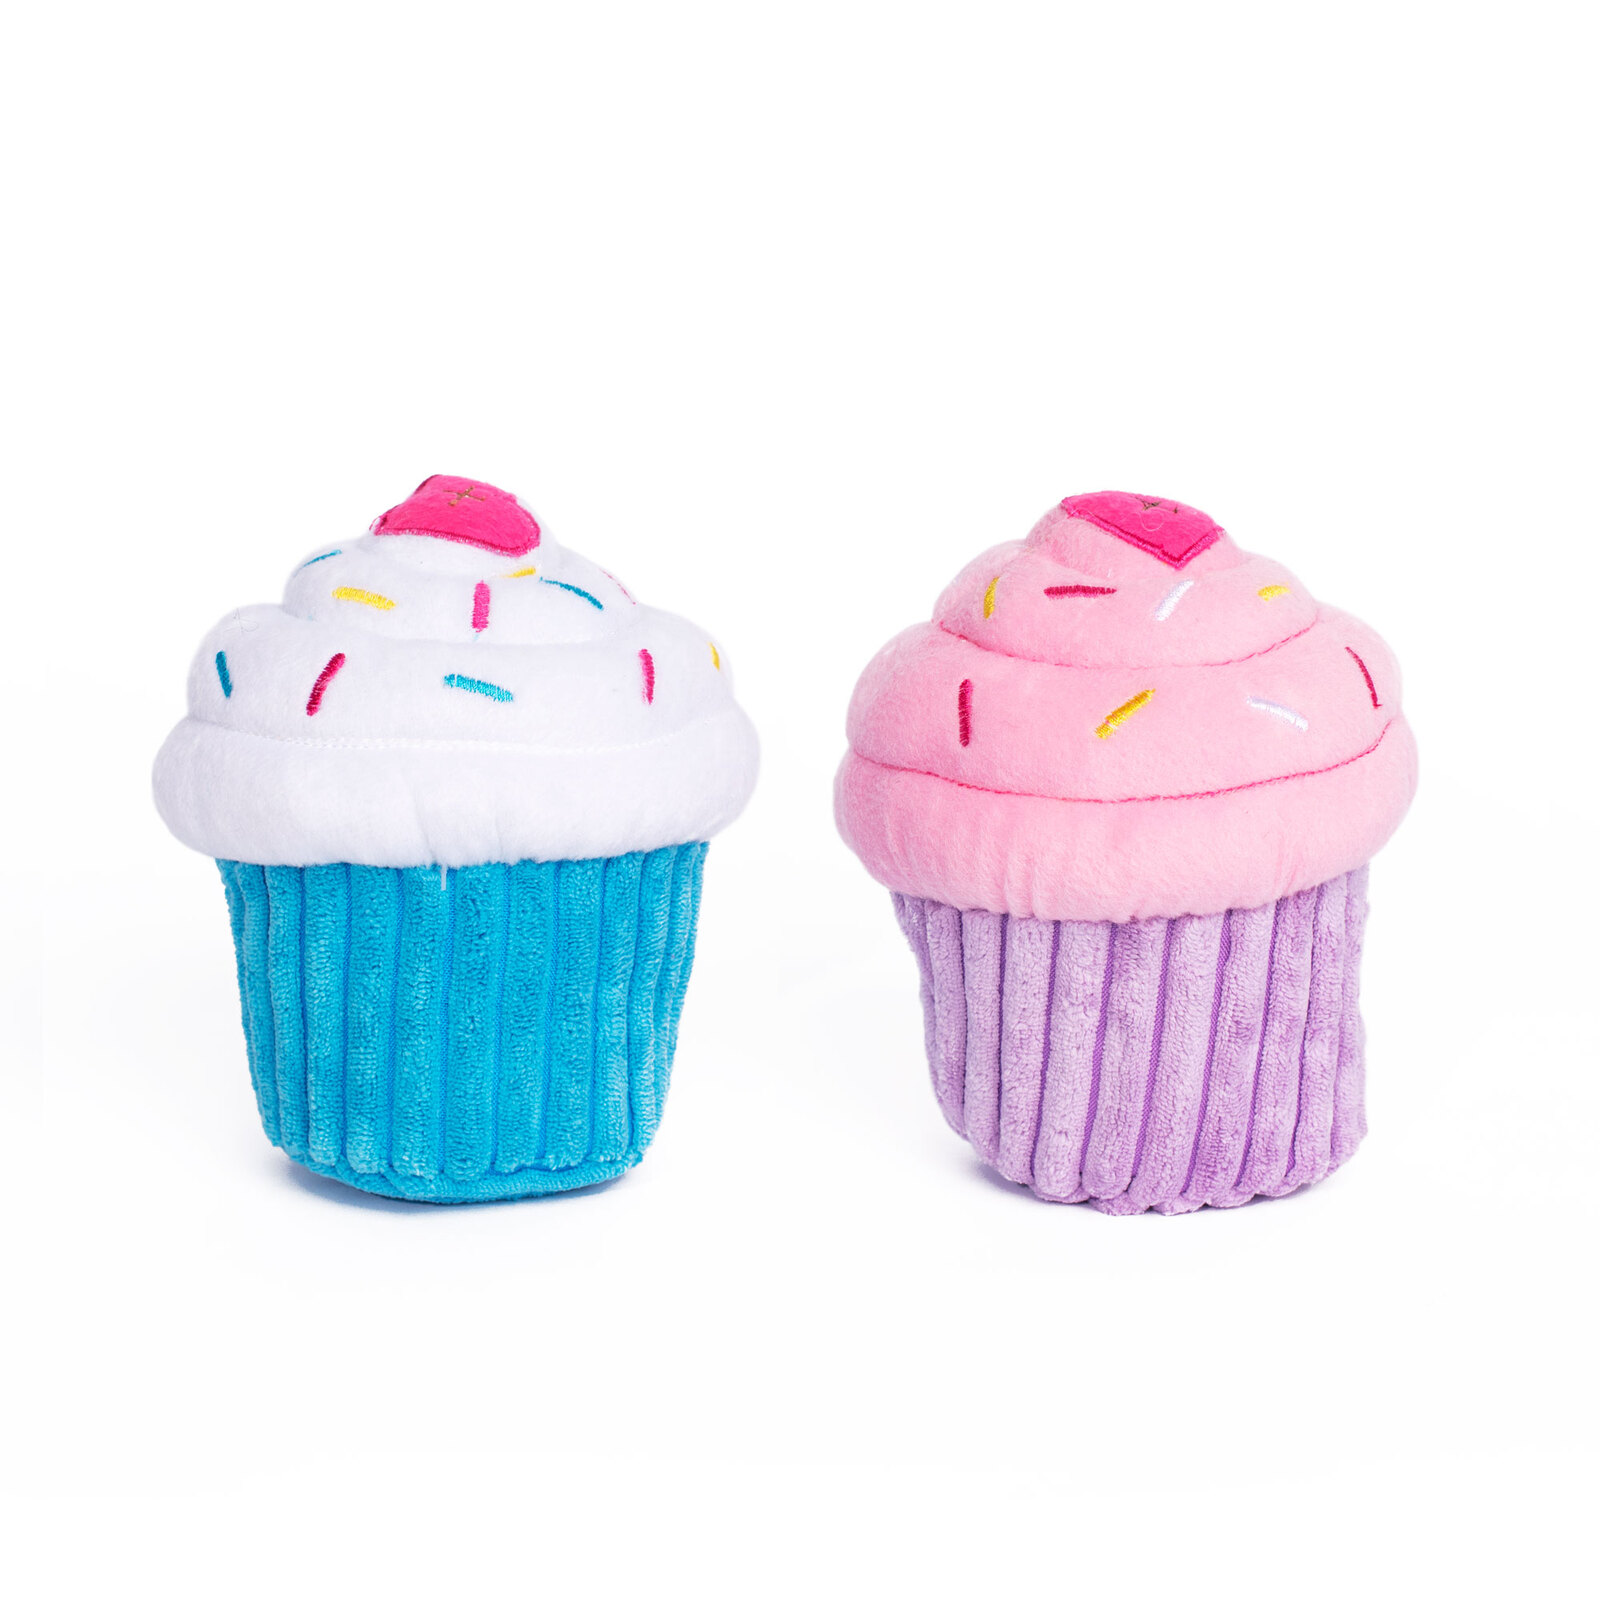 Zippy Paws Plush Squeaker Dog Toy - Cupcake in Blue or Pink image 4